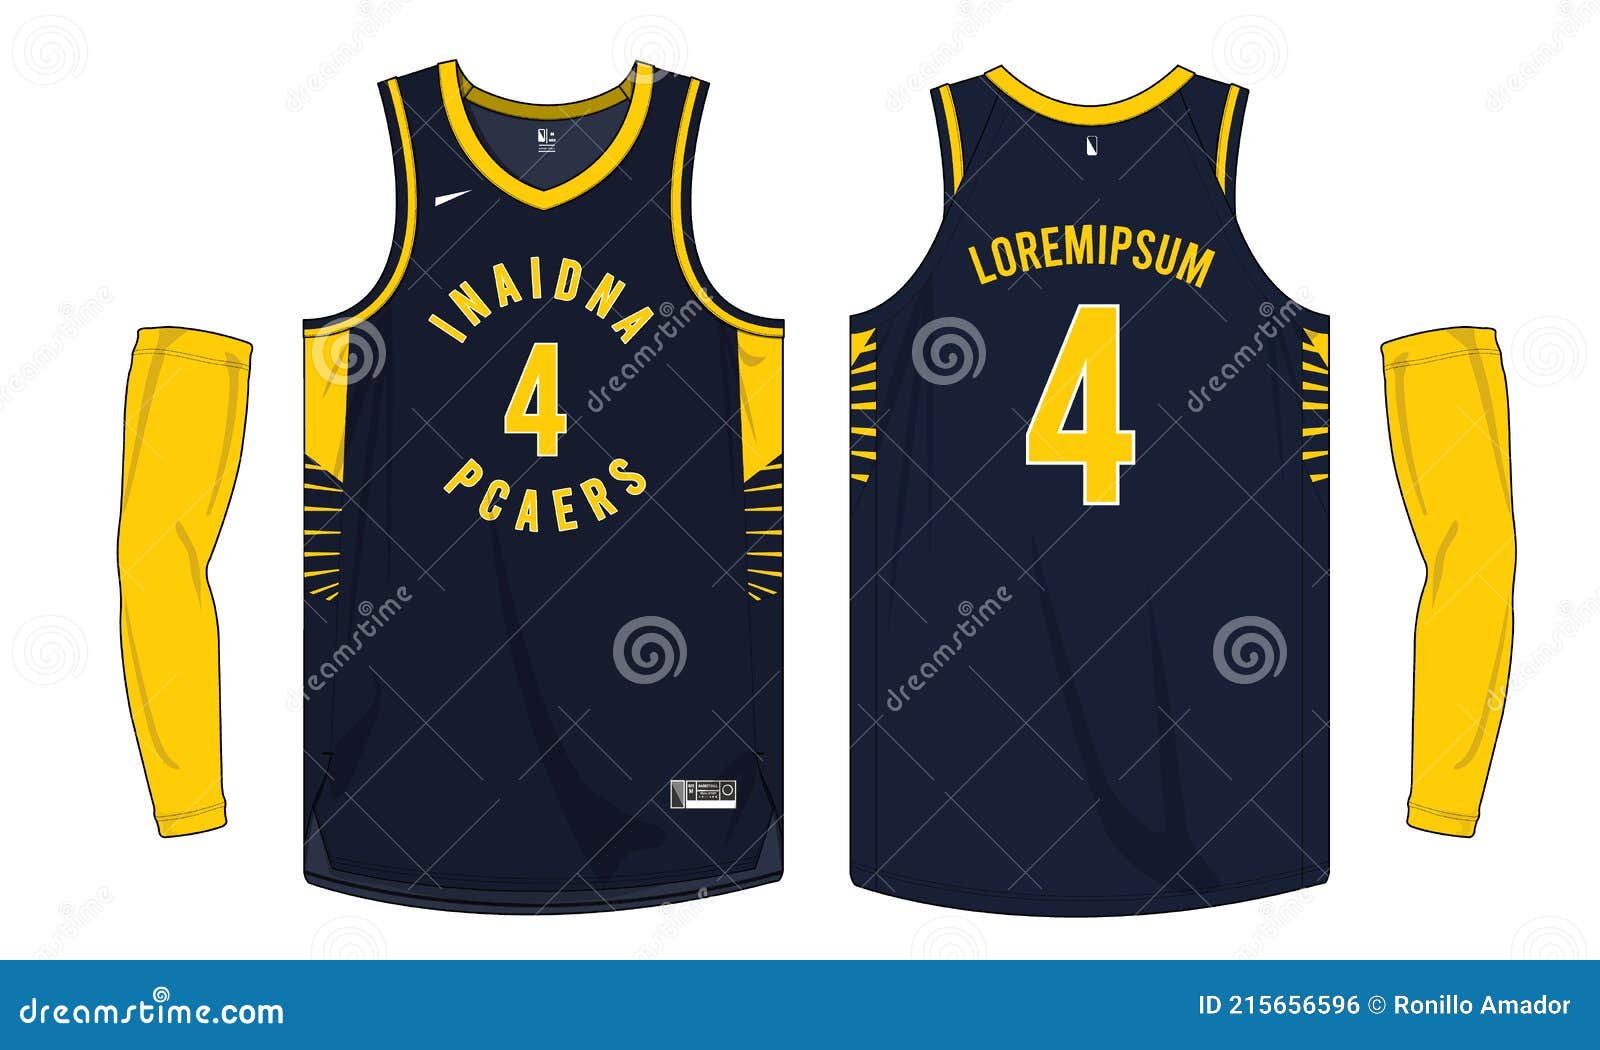 Basketball uniform mockup template design Vector Image